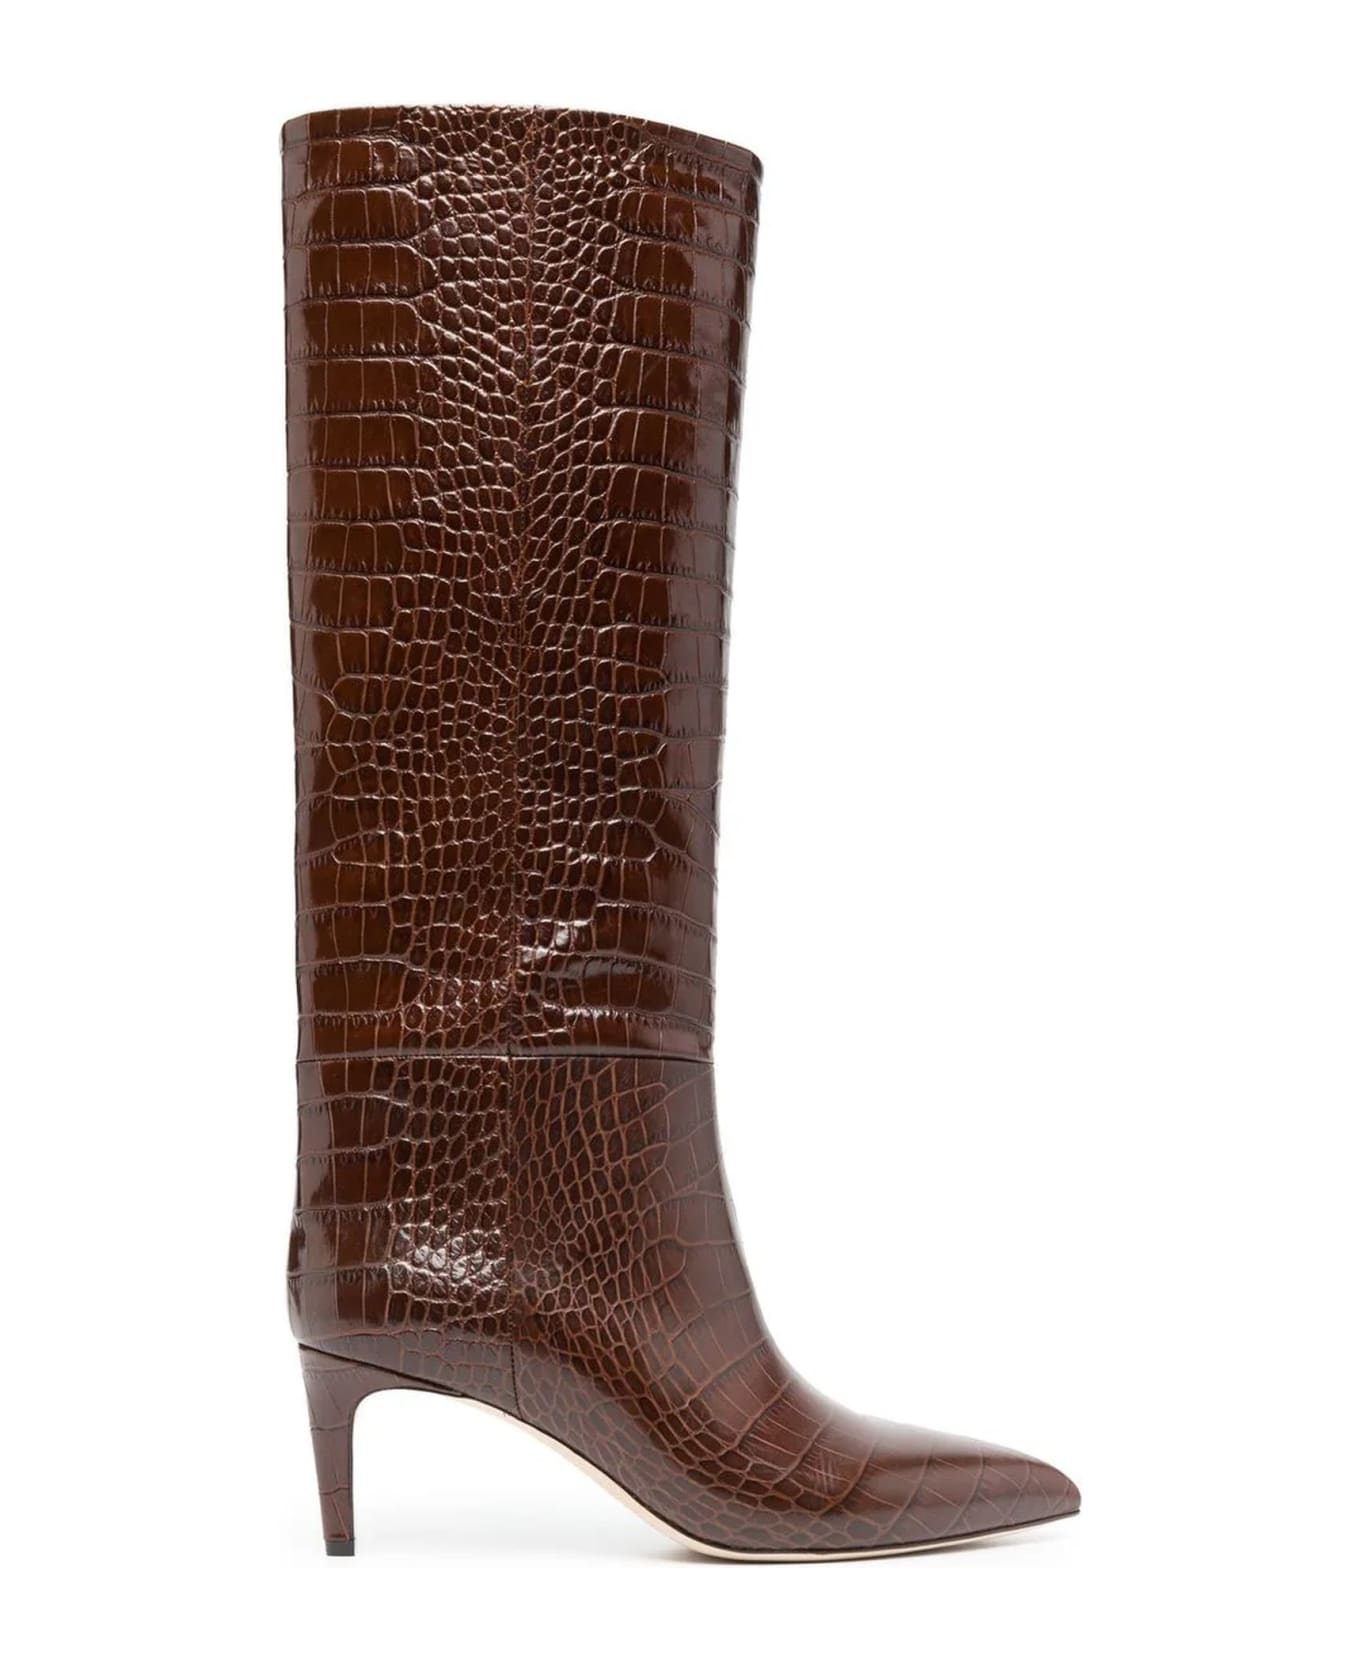 Paris Texas Brown Leather Croc-effect Stiletto Boots - Brown ブーツ